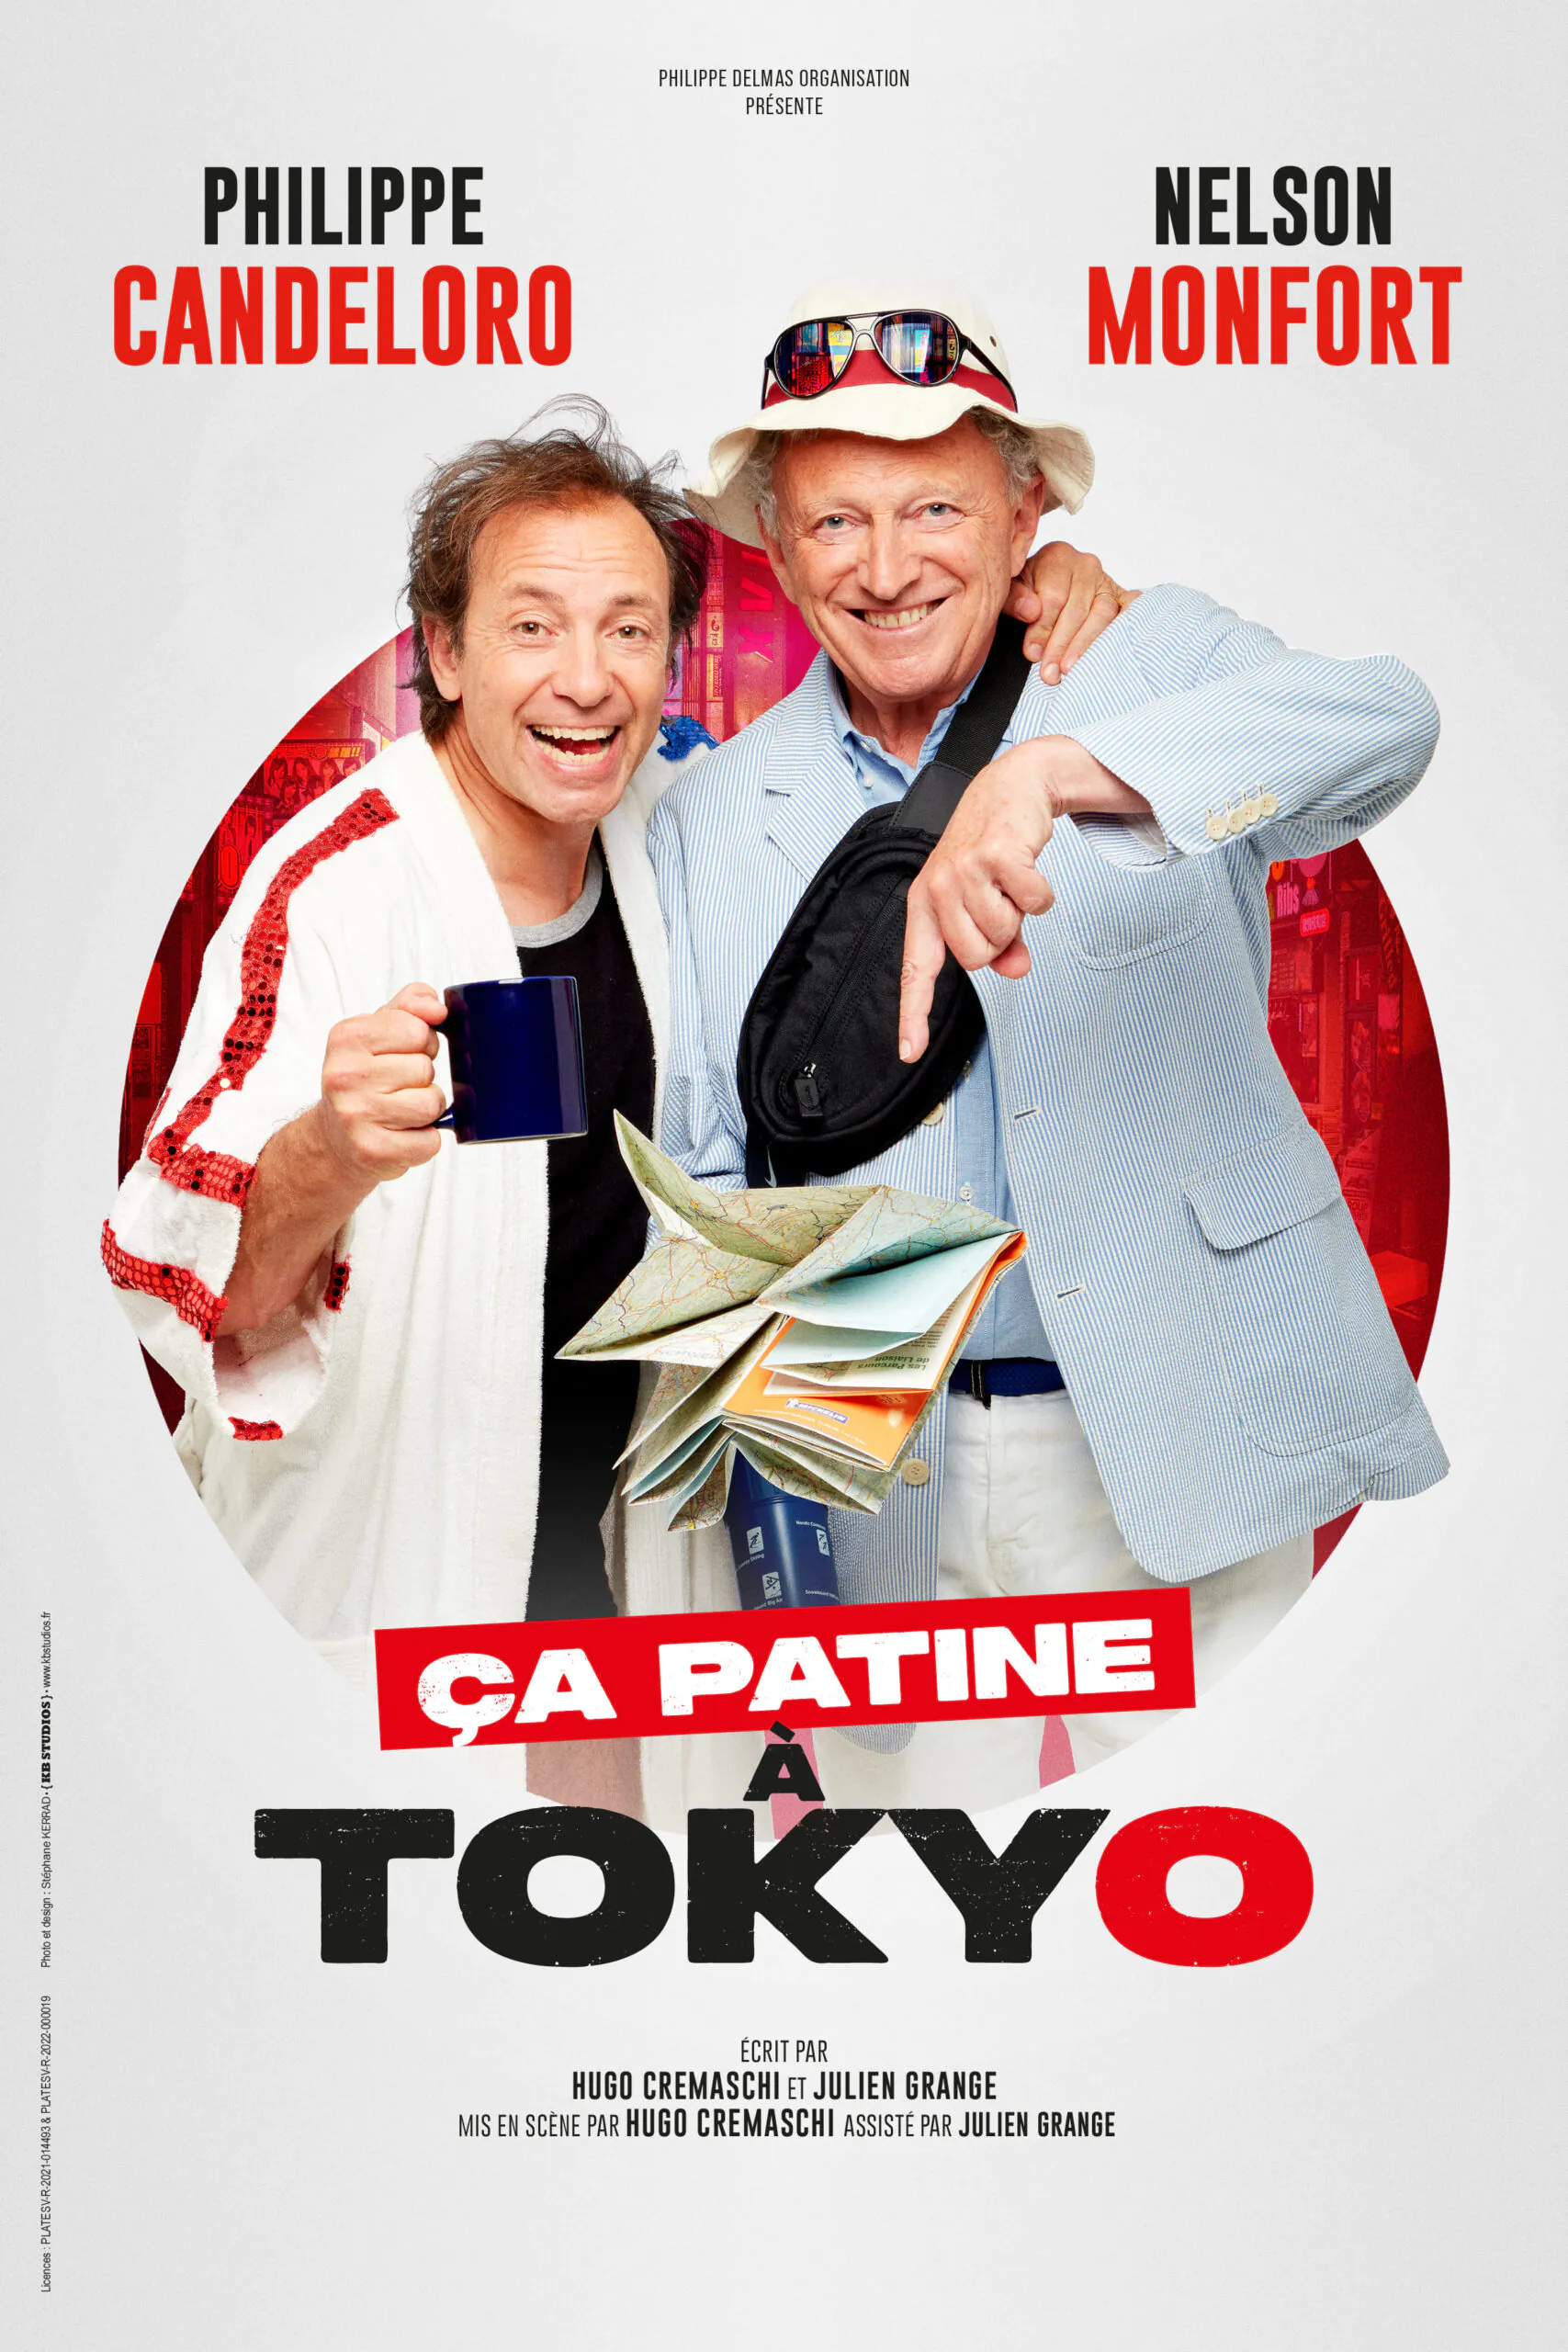 Philippe Candeloro & Nelson Monfort dans "Ça patine à Tokyo"